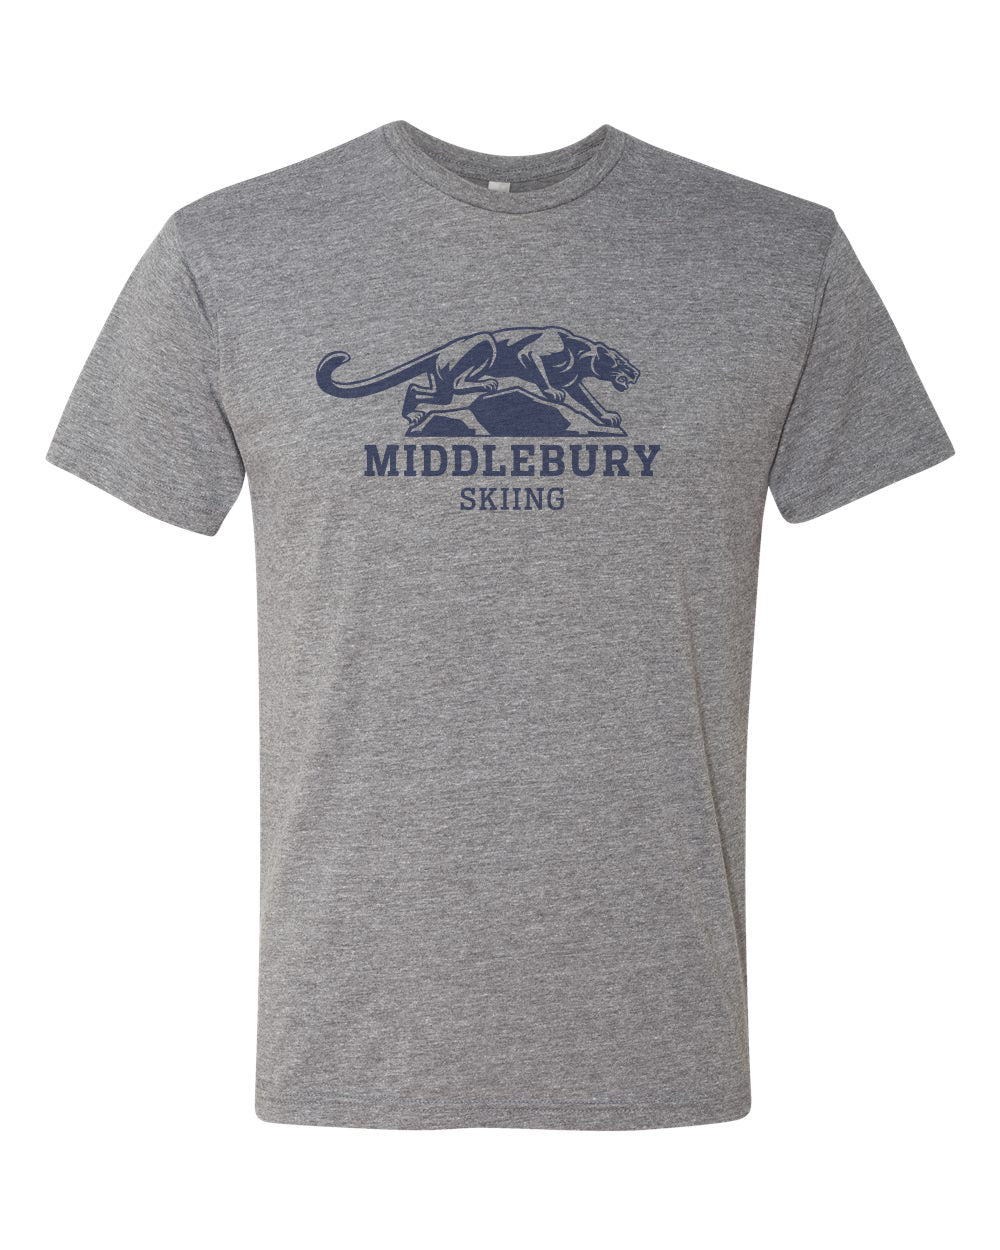 Middlebury Panther Skiing T-Shirt (grey-triblend)